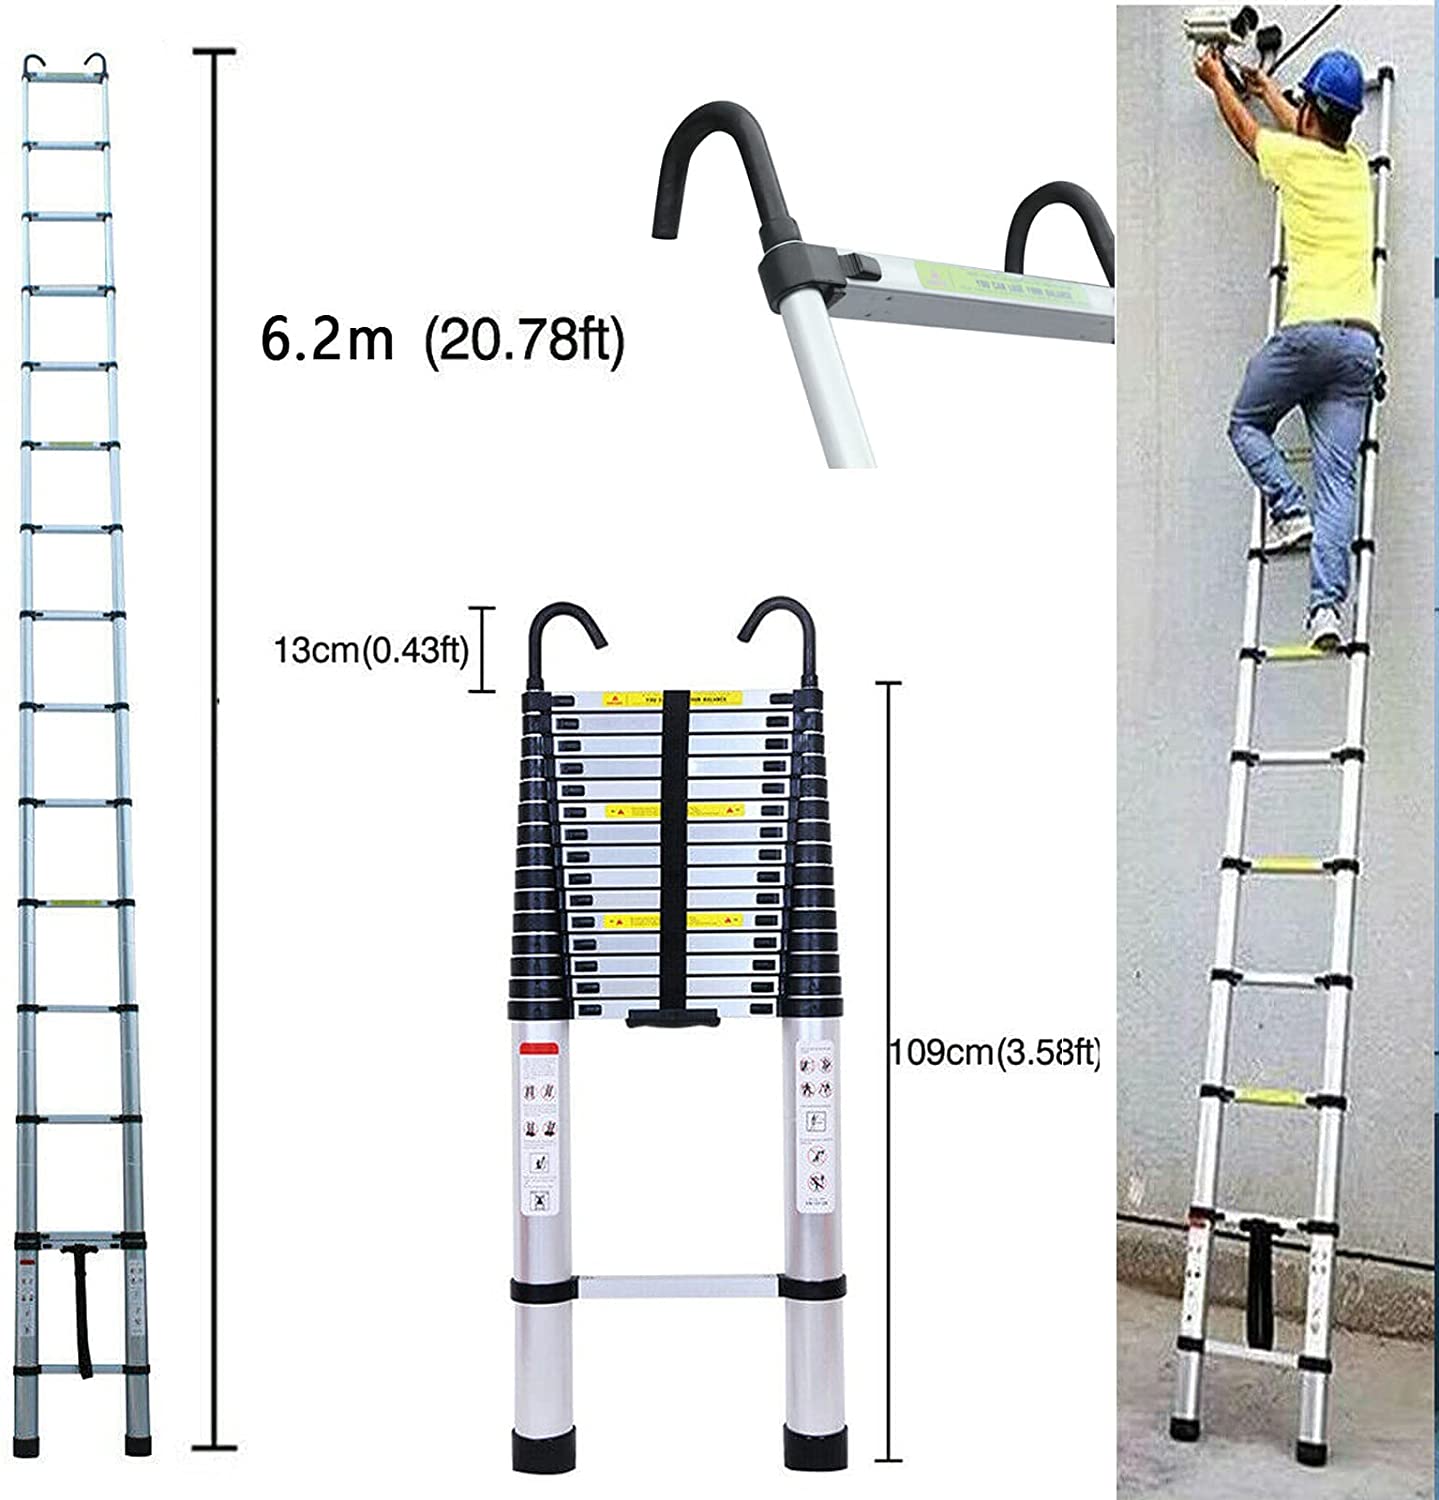 10. JUPITOR 20 FT Extension Ladder with 2 Detachable Hooks